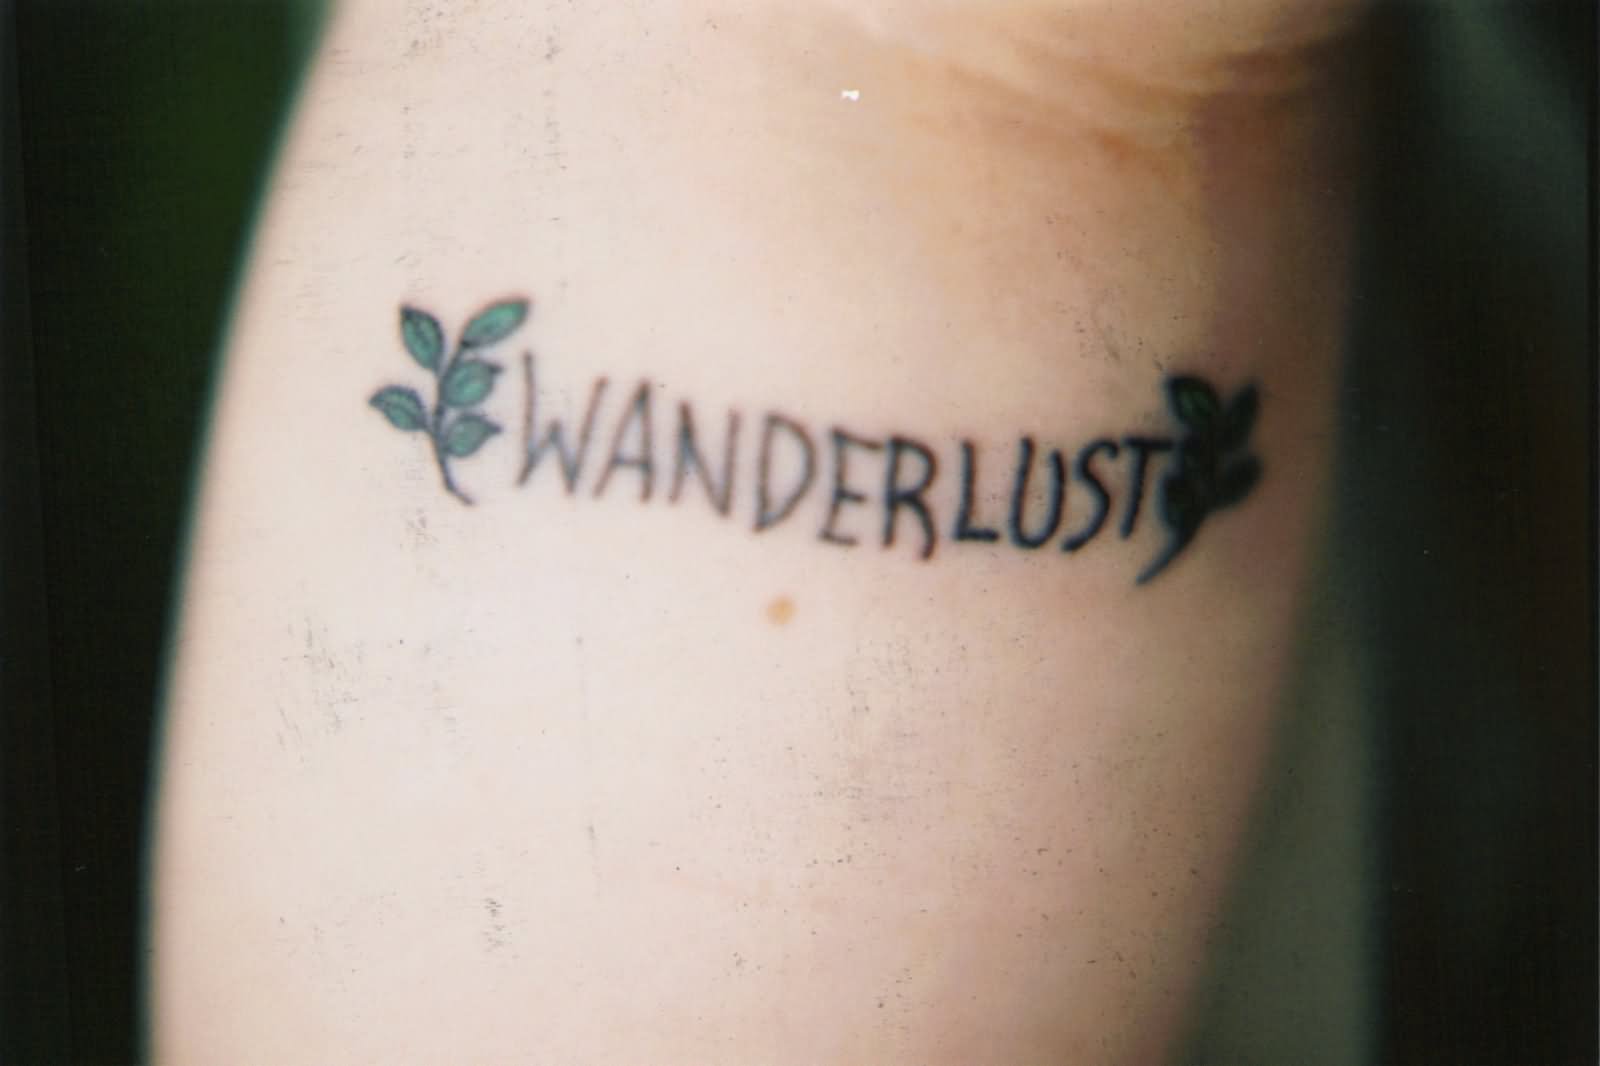 Wanderlust Word Tattoo Design For Arm